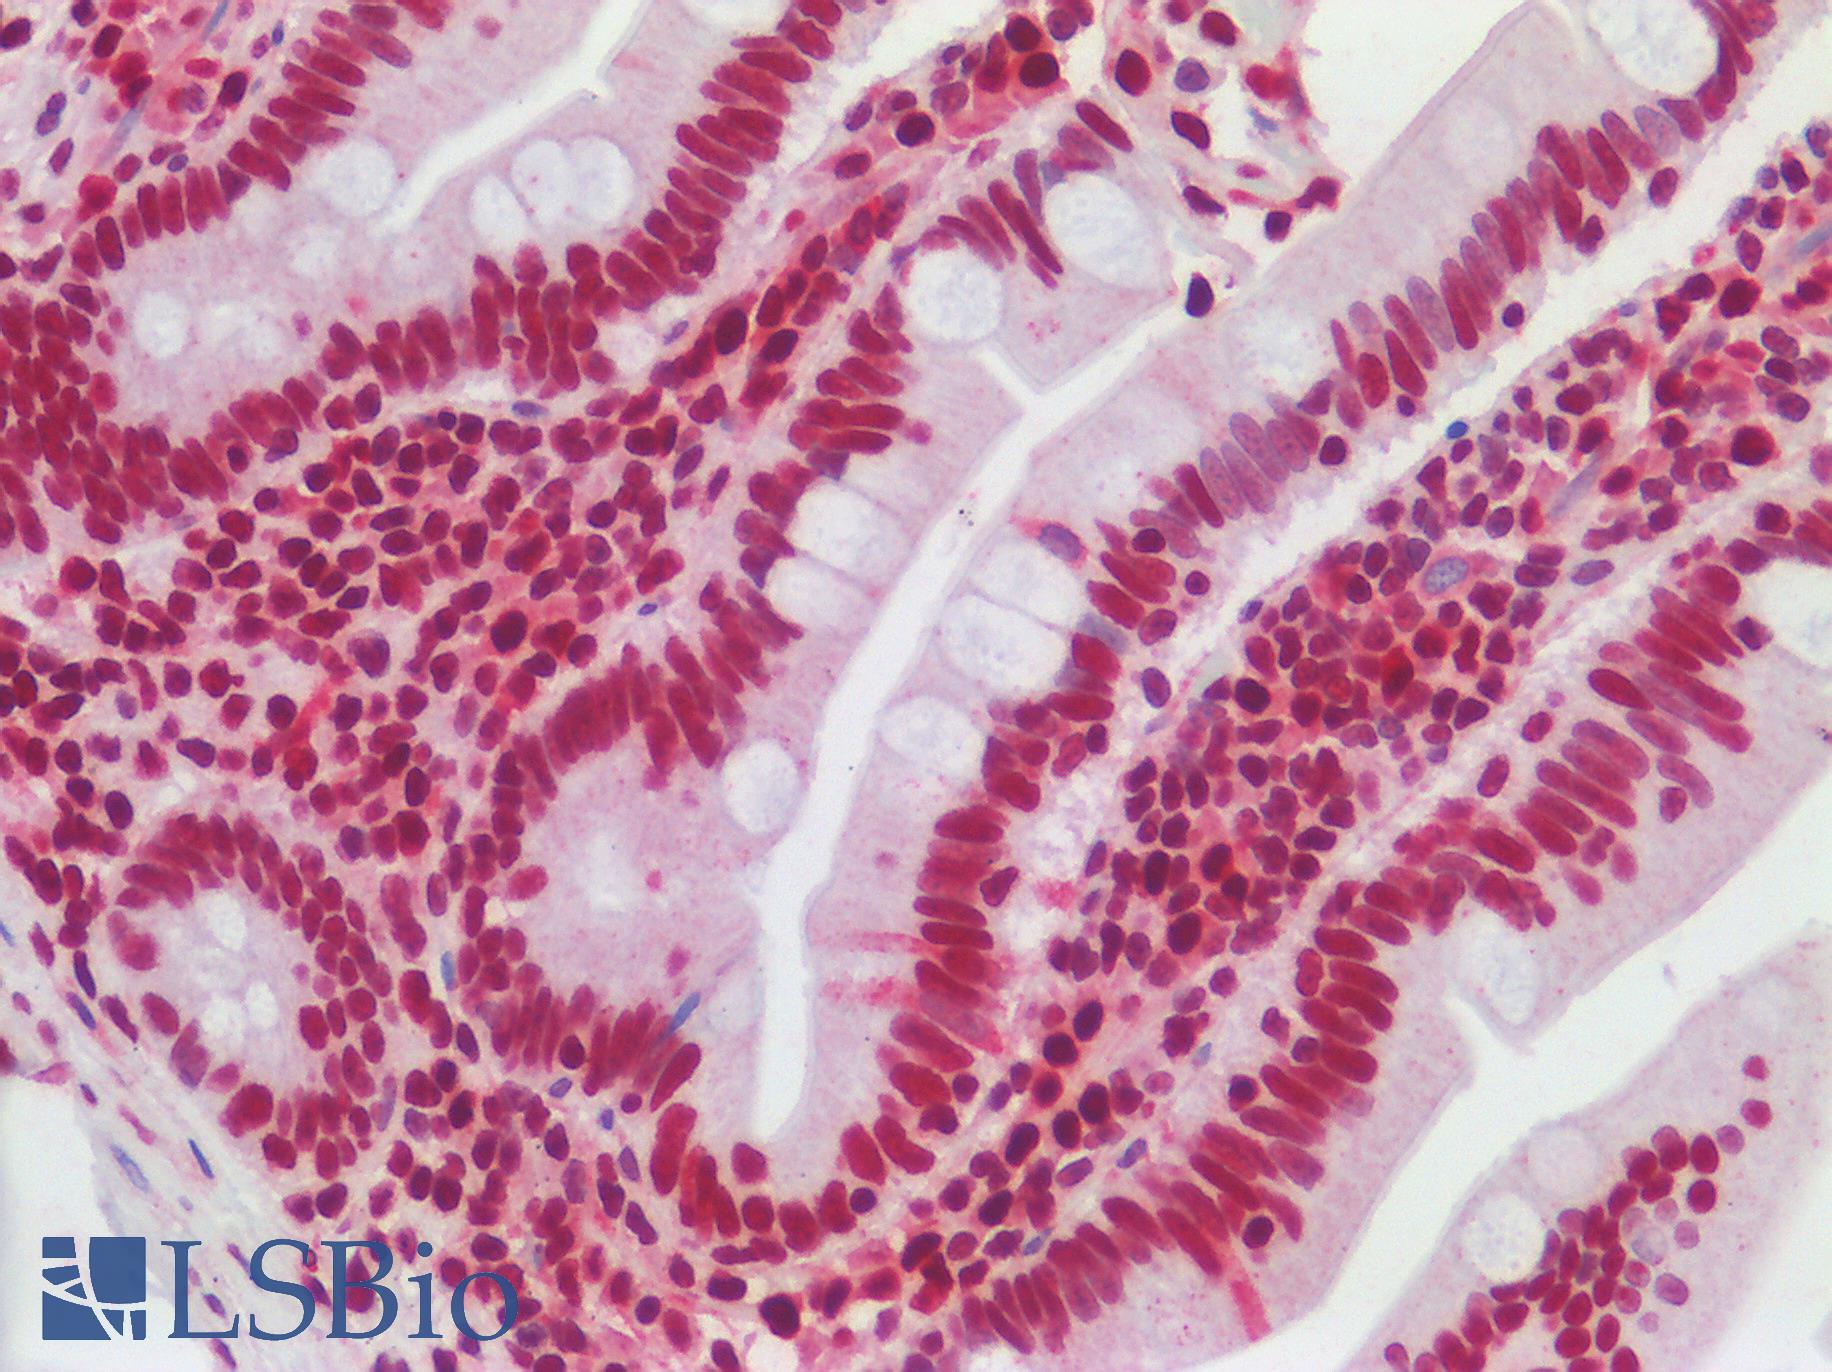 SUB1 Antibody - Human Small Intestine: Formalin-Fixed, Paraffin-Embedded (FFPE)